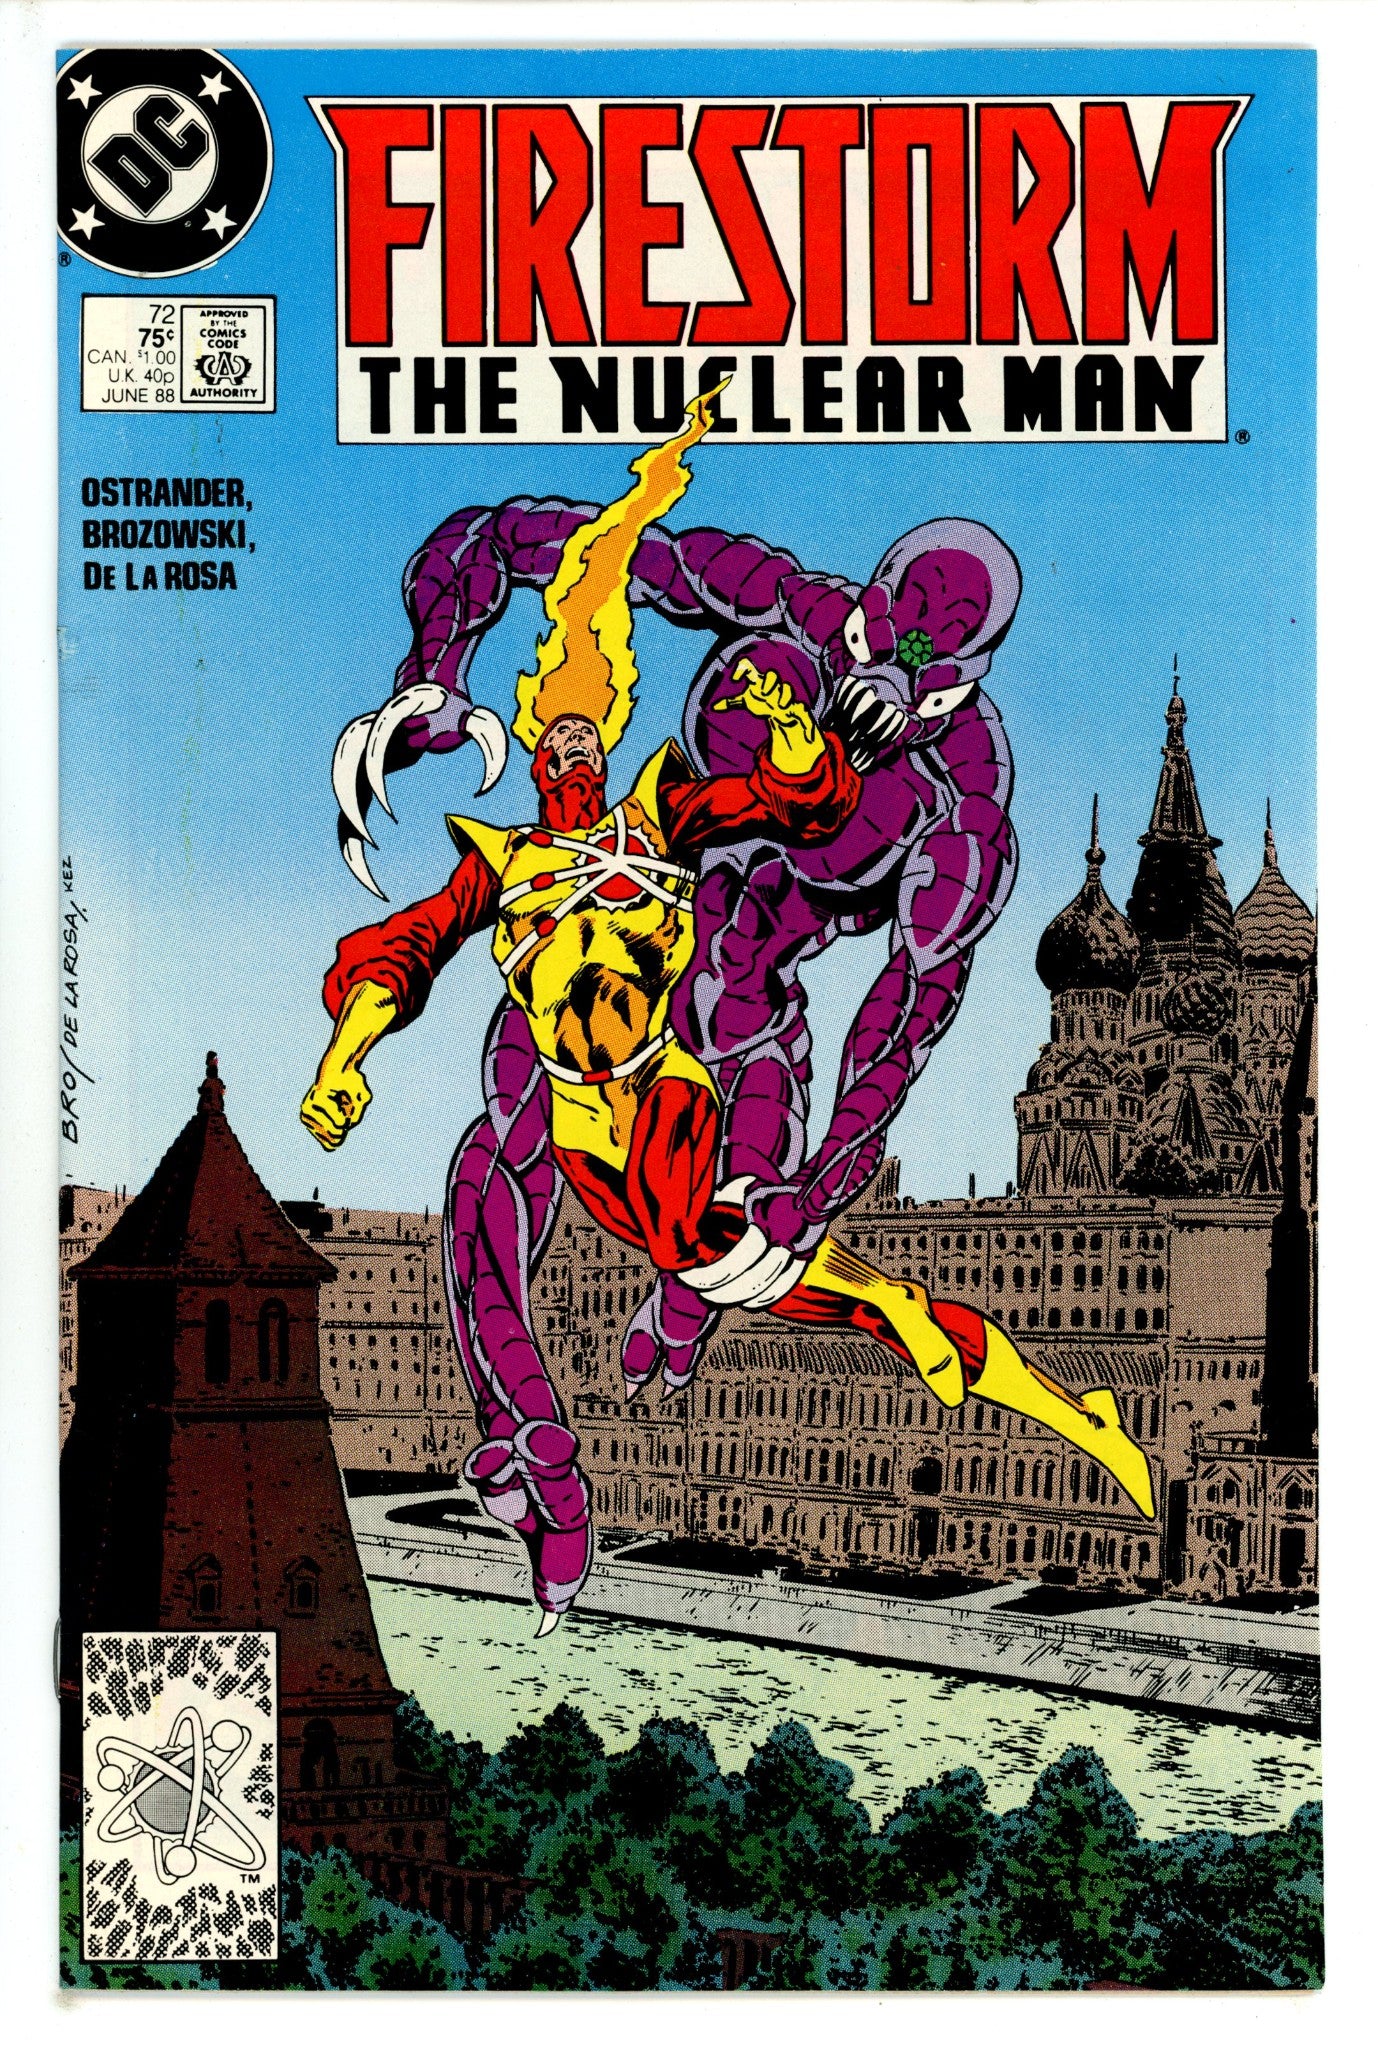 Firestorm the Nuclear Man Vol 2 72 (1988)